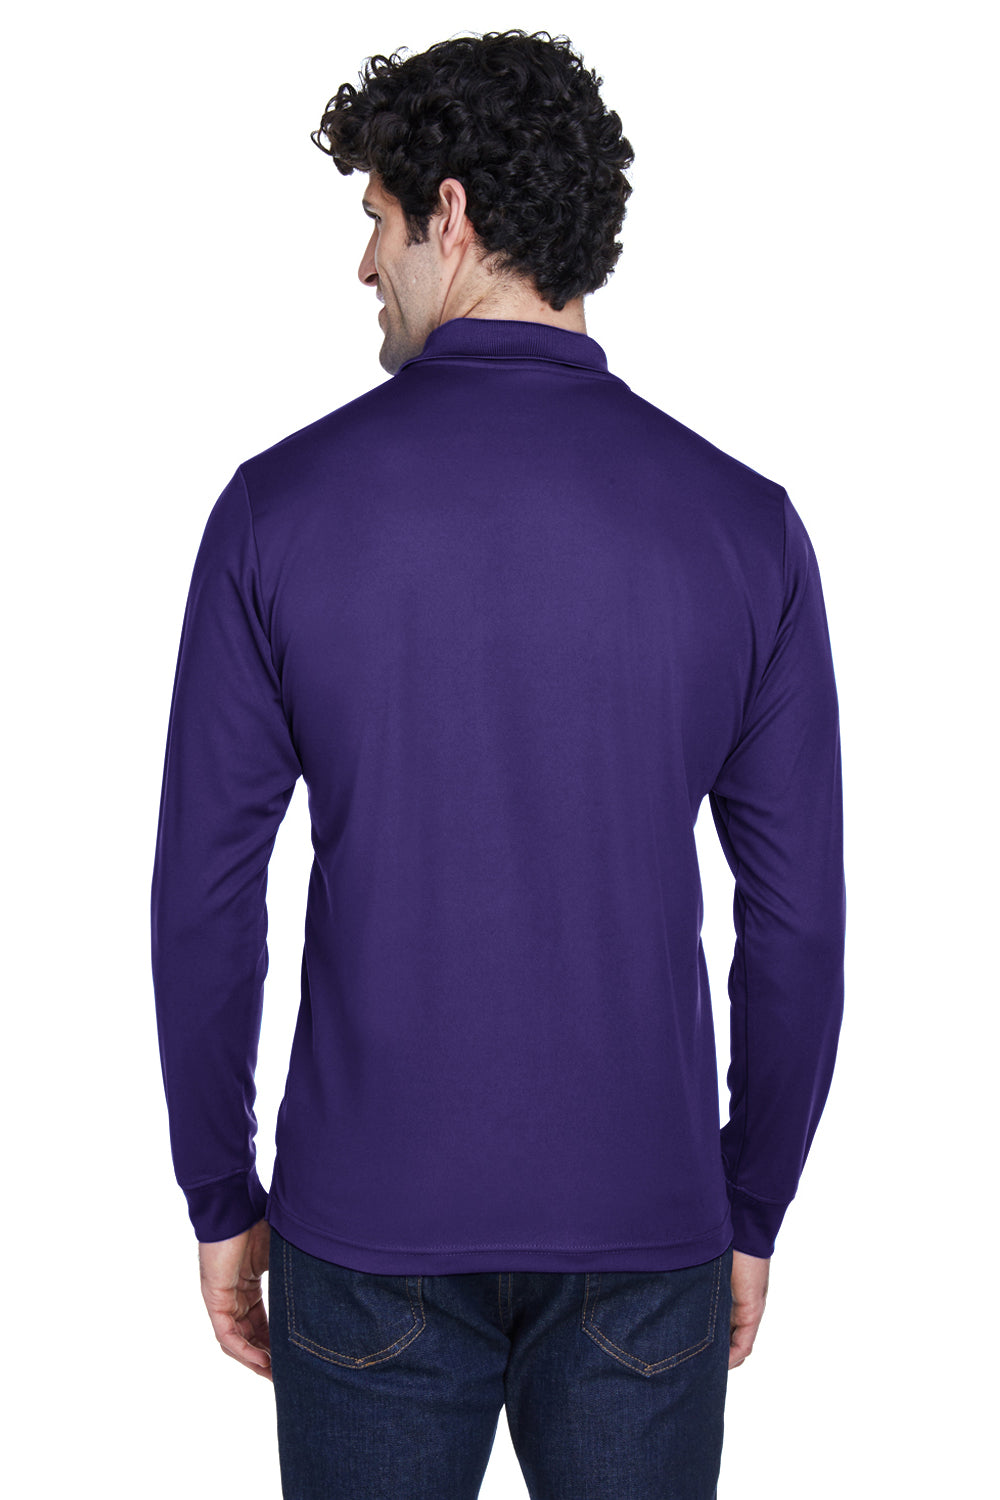 Core 365 88192 Mens Pinnacle Performance Moisture Wicking Long Sleeve Polo Shirt Purple Back